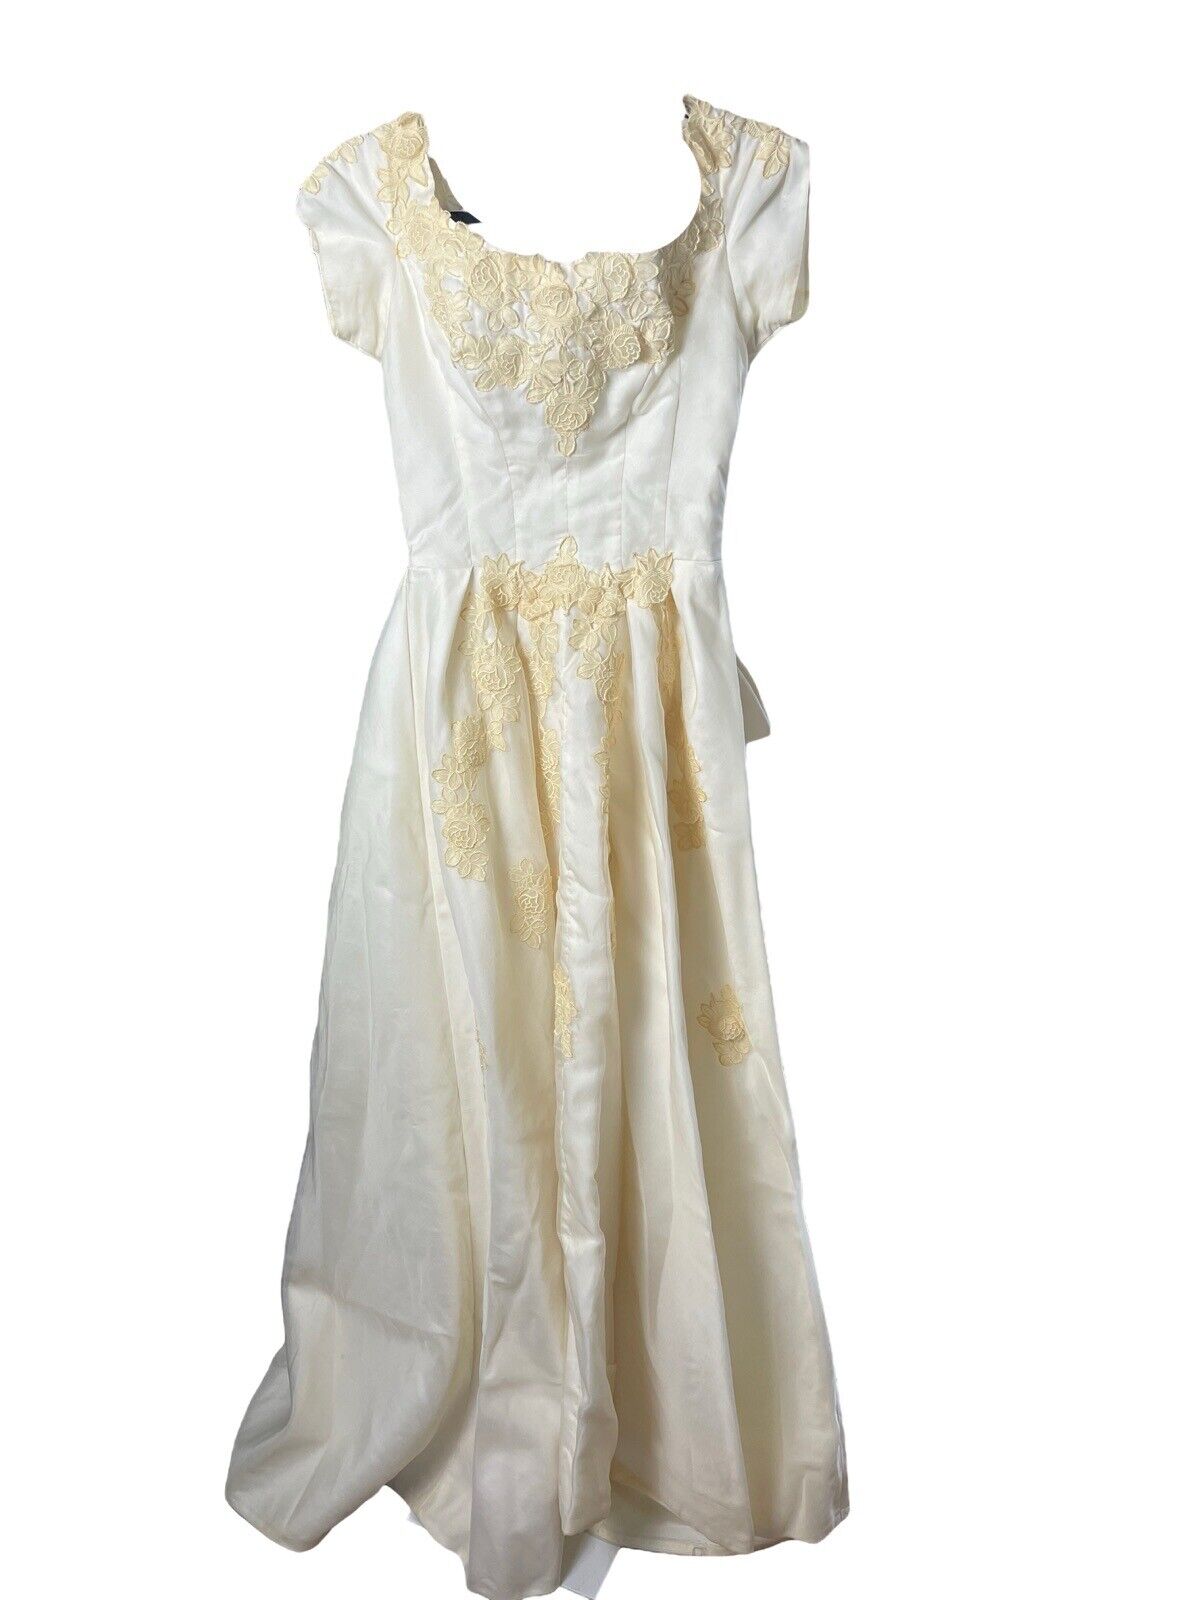 vintage wedding dress 1960's - image 2